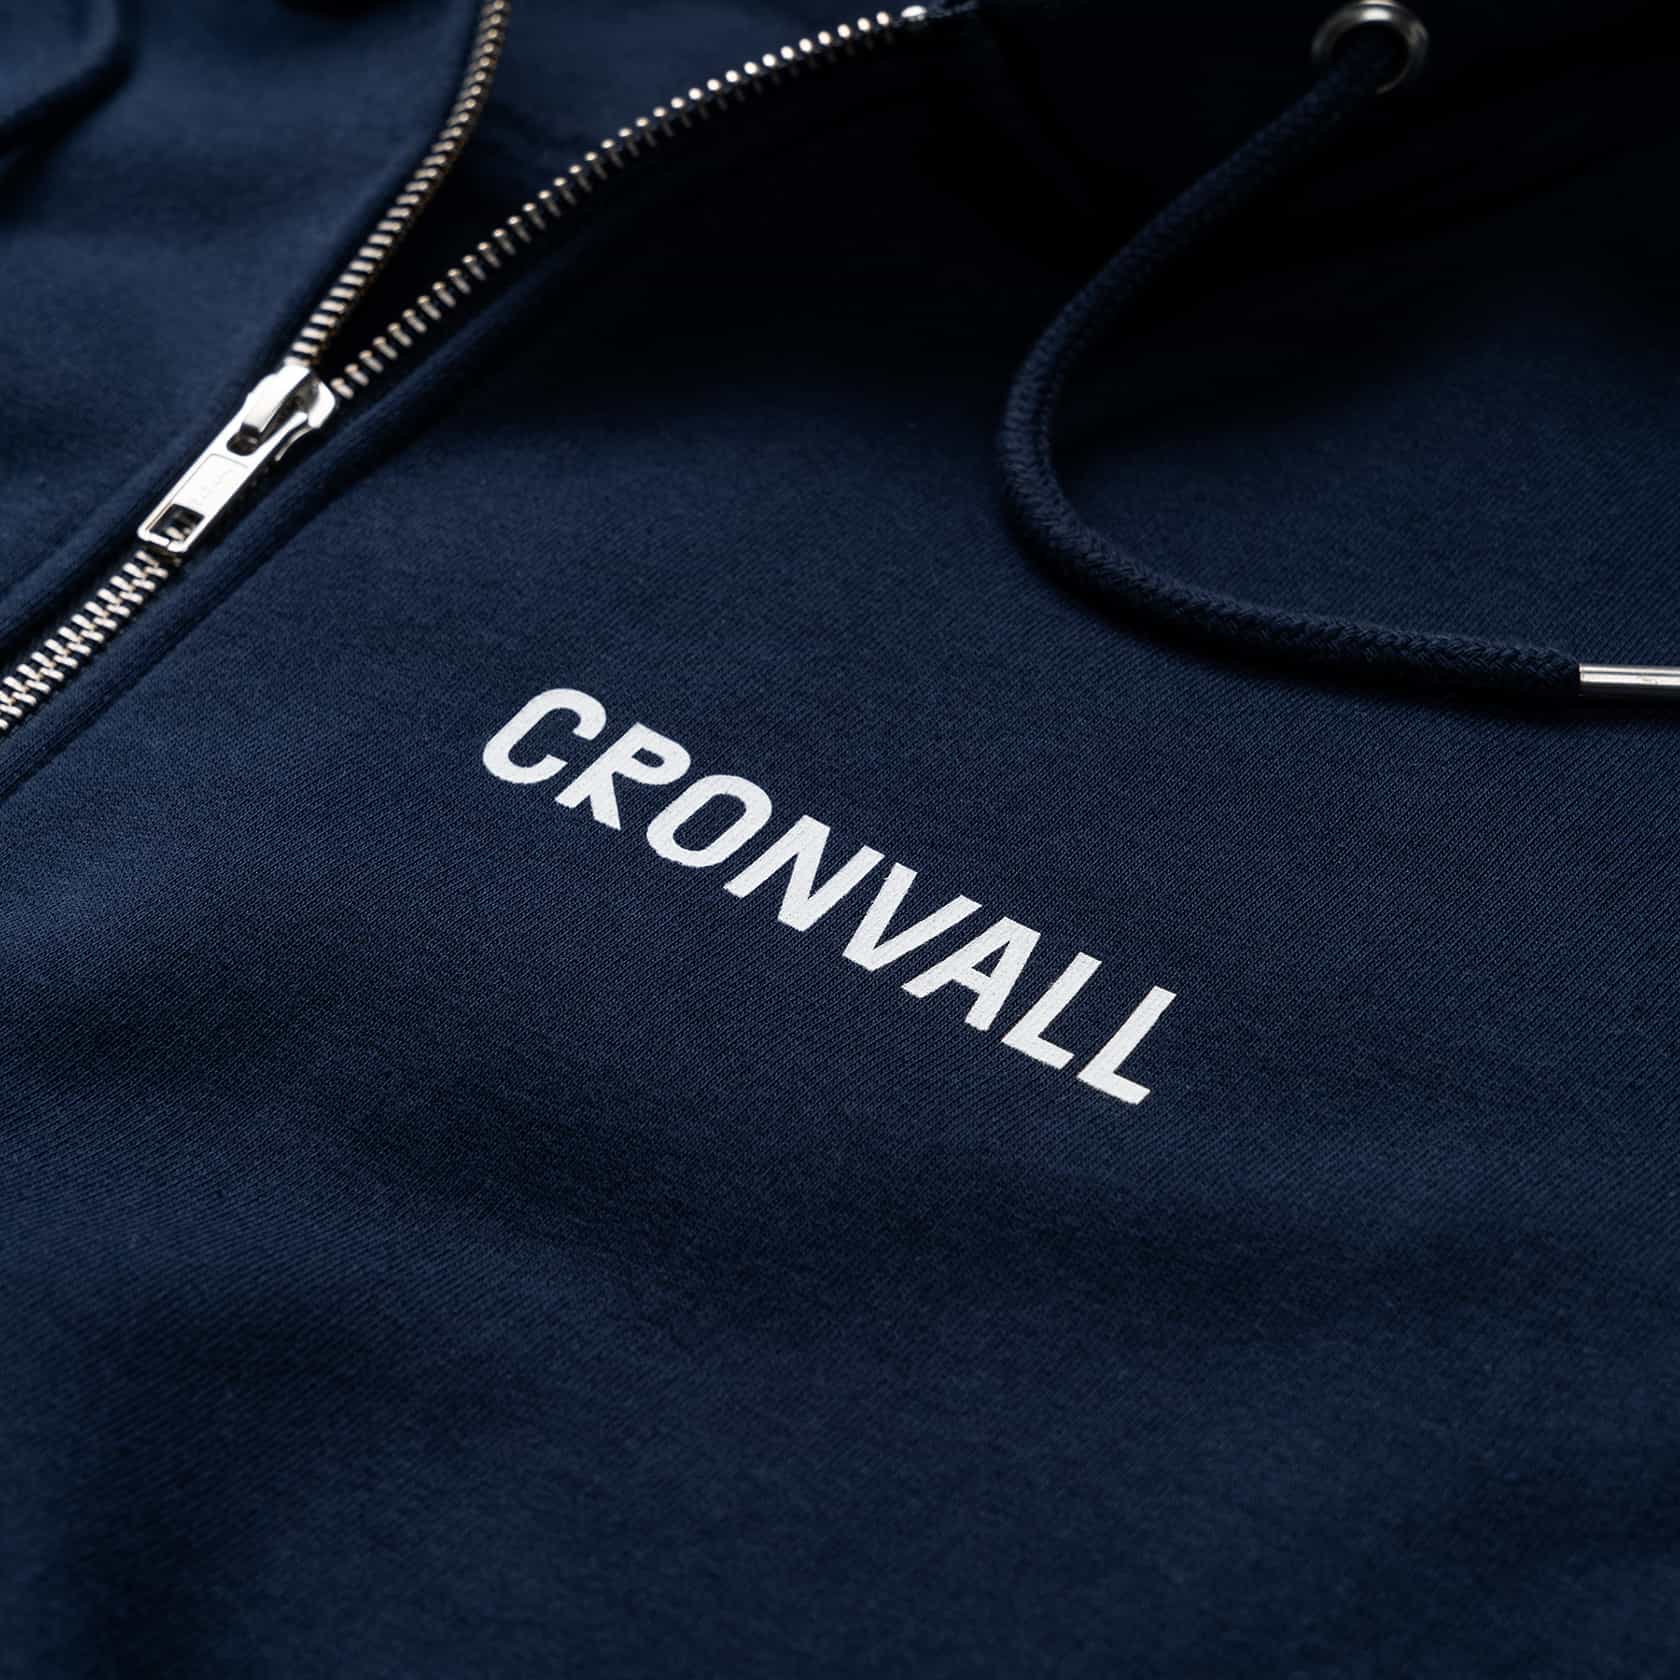 Cronwall laadukkaat hupparit omalla logolla